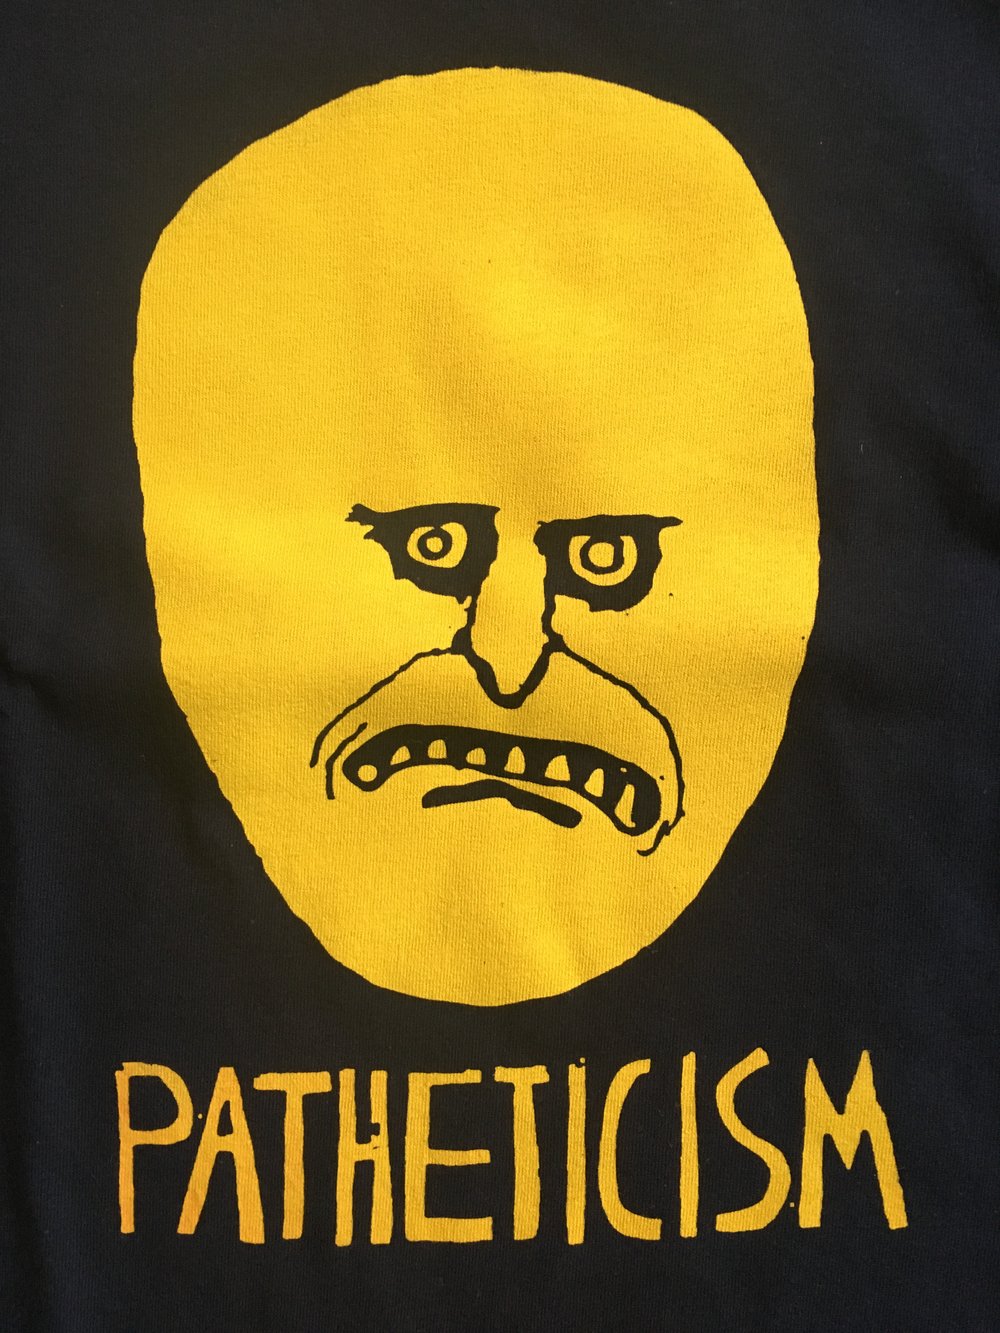 Patheticism Tee Shirt